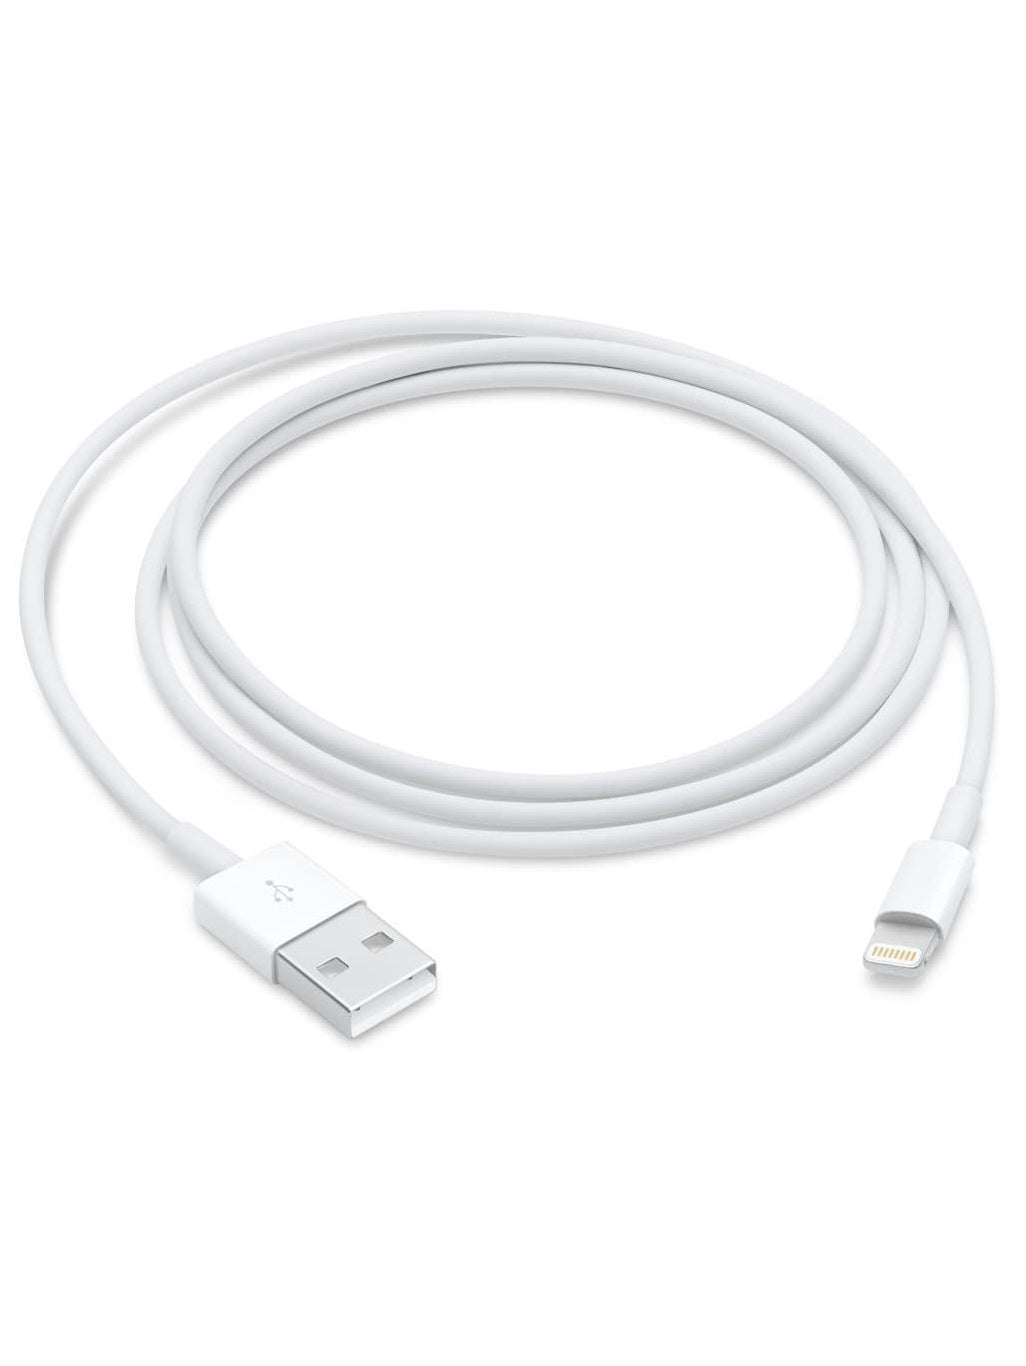 Cable Apple Original, Lightning a USB, 3.3 pies.